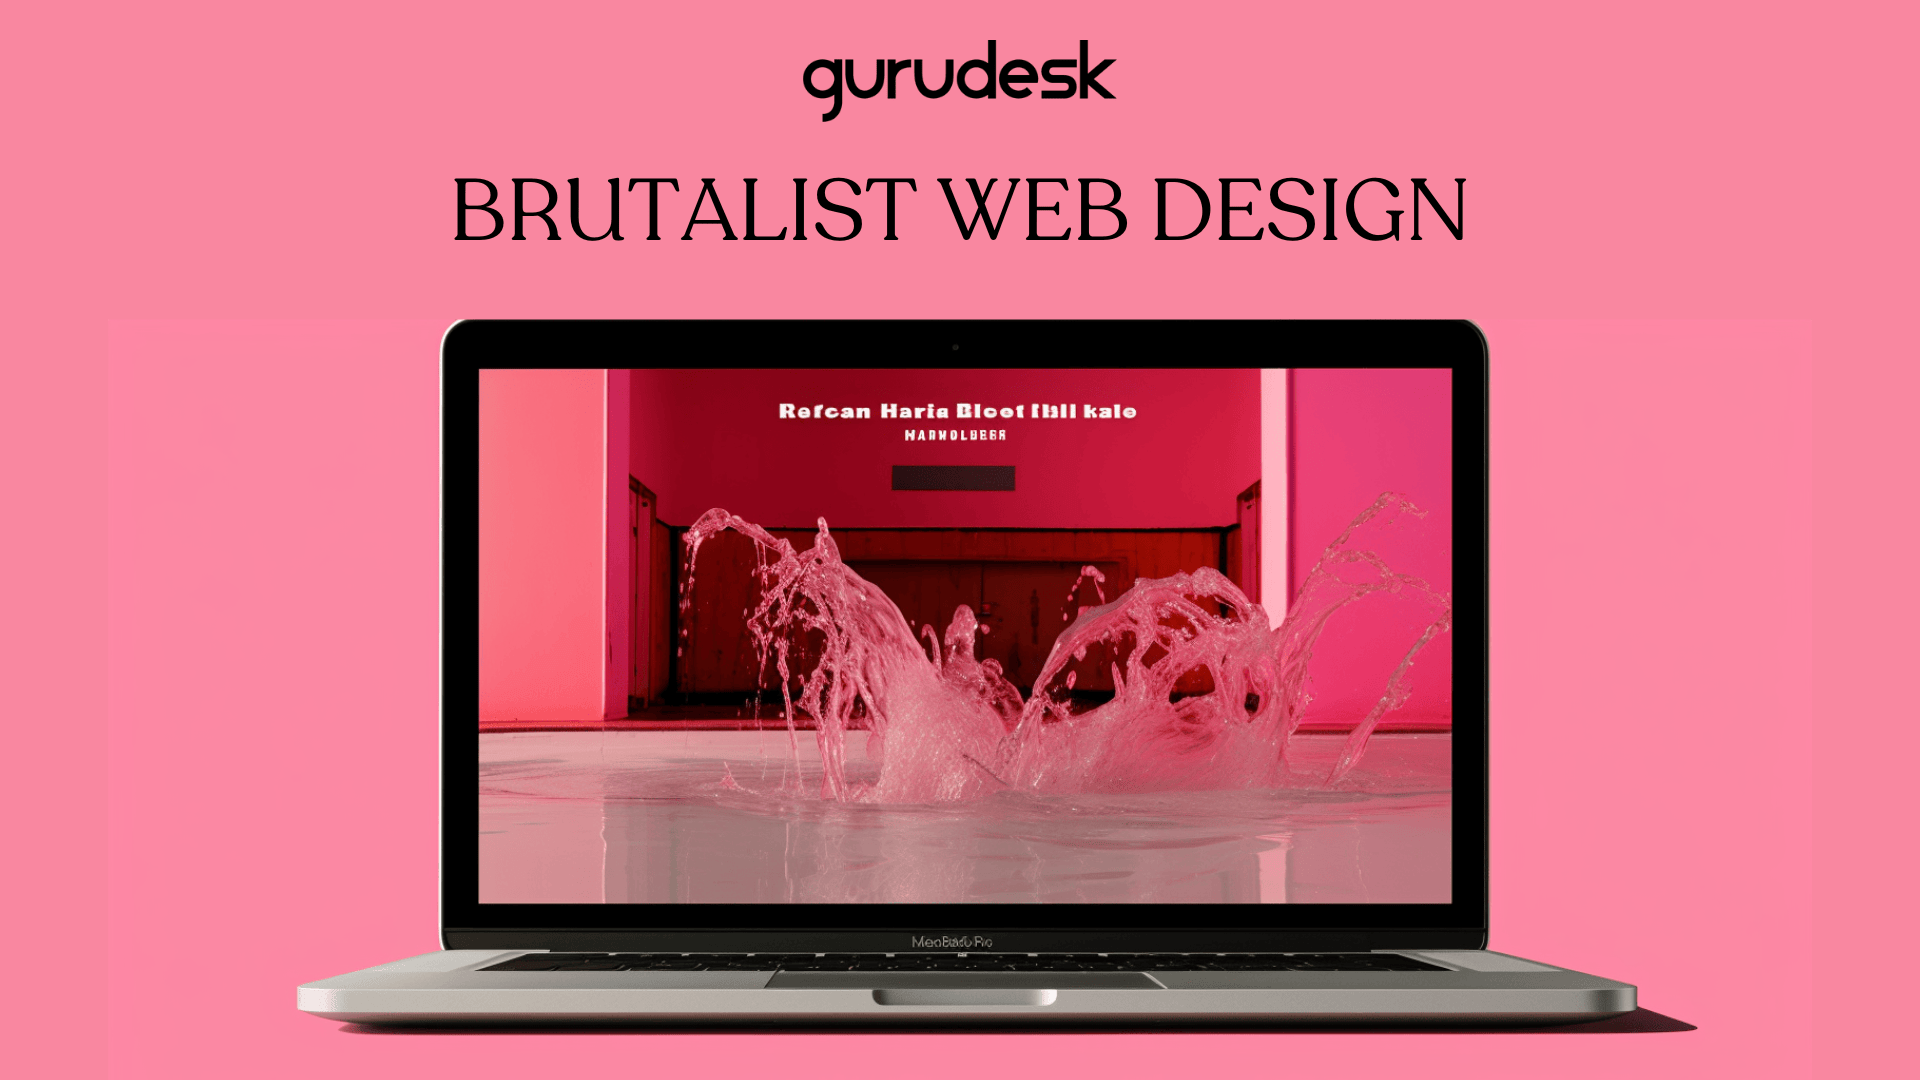 Brutaism website design Brutalism web design Brutalist Web Design Brutalist UI Design Brutalism Design Trend Guru Dev Webdev Guru Design Design Guru